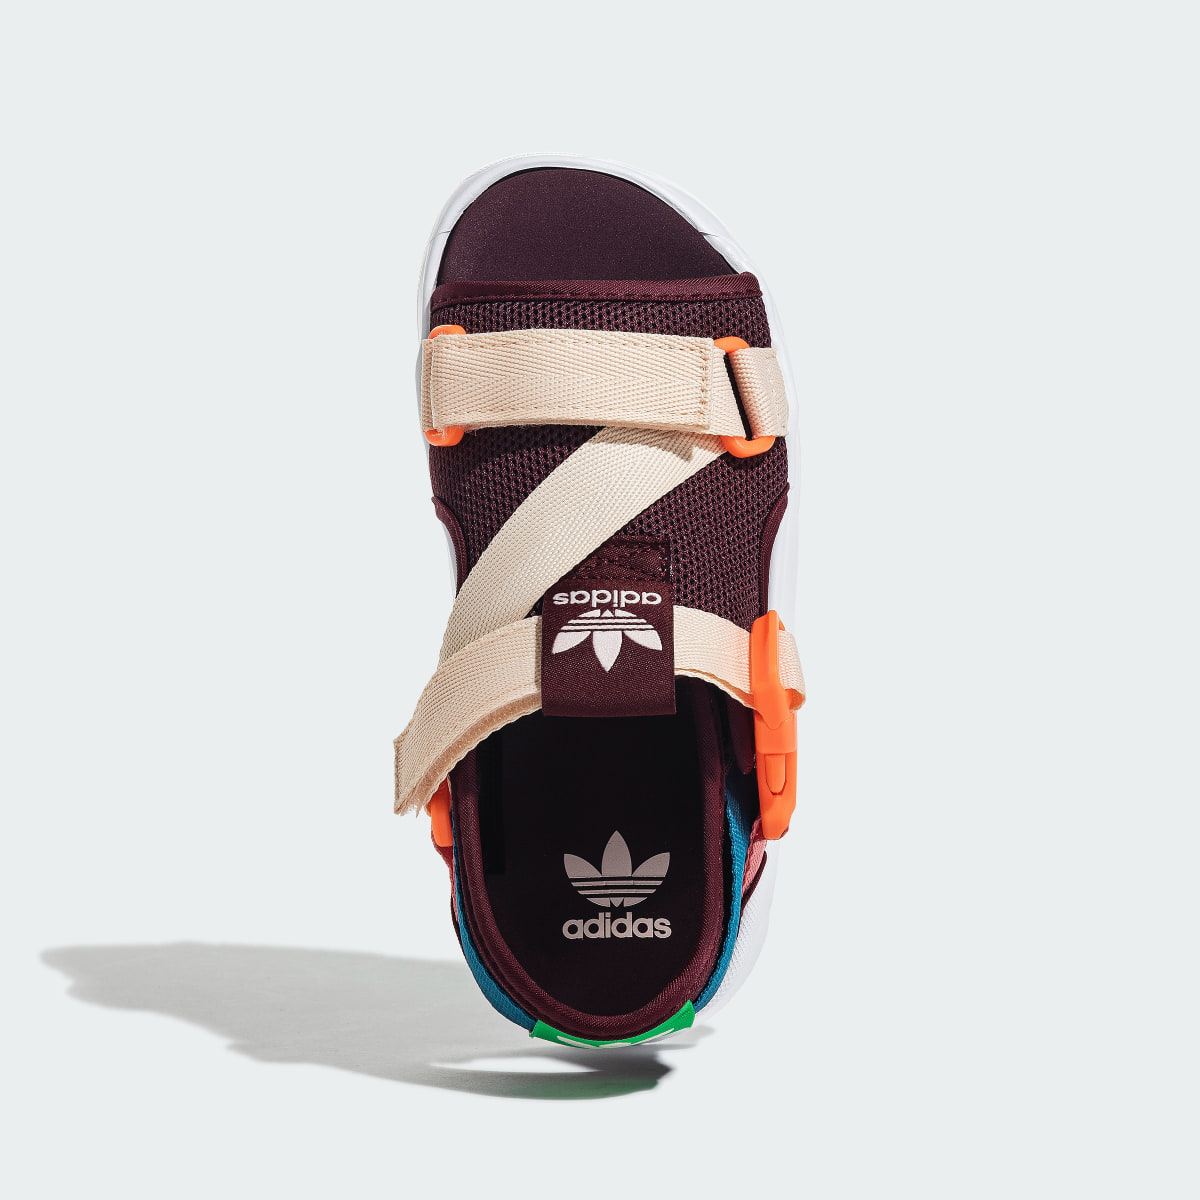 Adidas 360 3.0 Sandals. 5